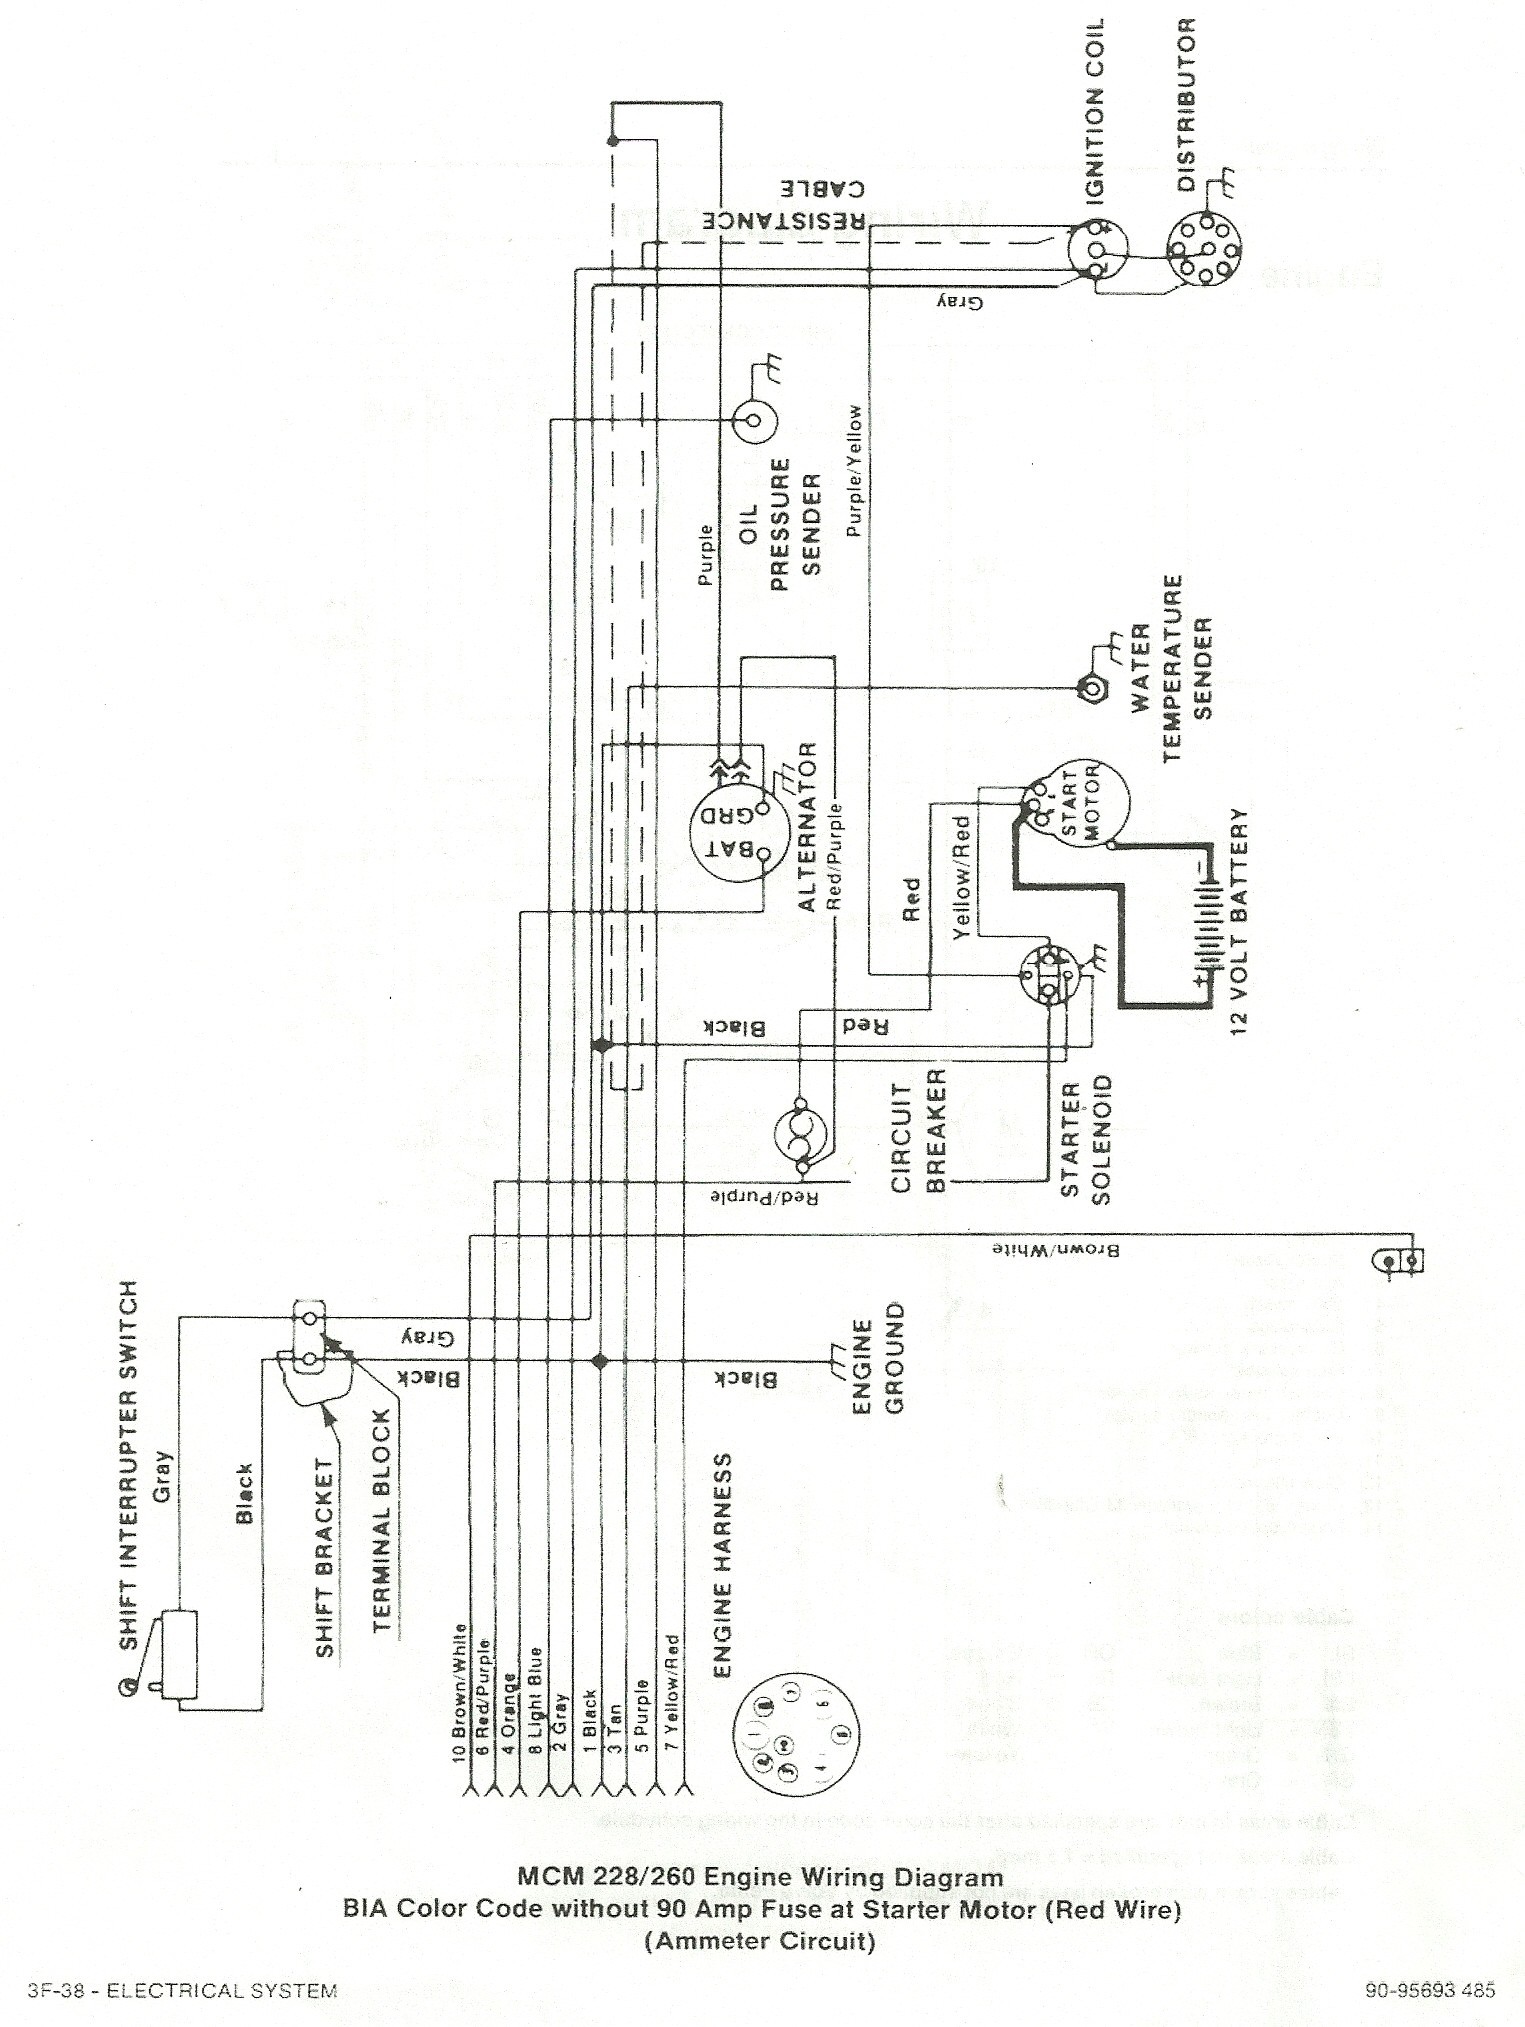 Wiring Diagram Mercruiser Alternator New Car 165 Mercruiser Starter Wiring Diagram Wiring Harness and